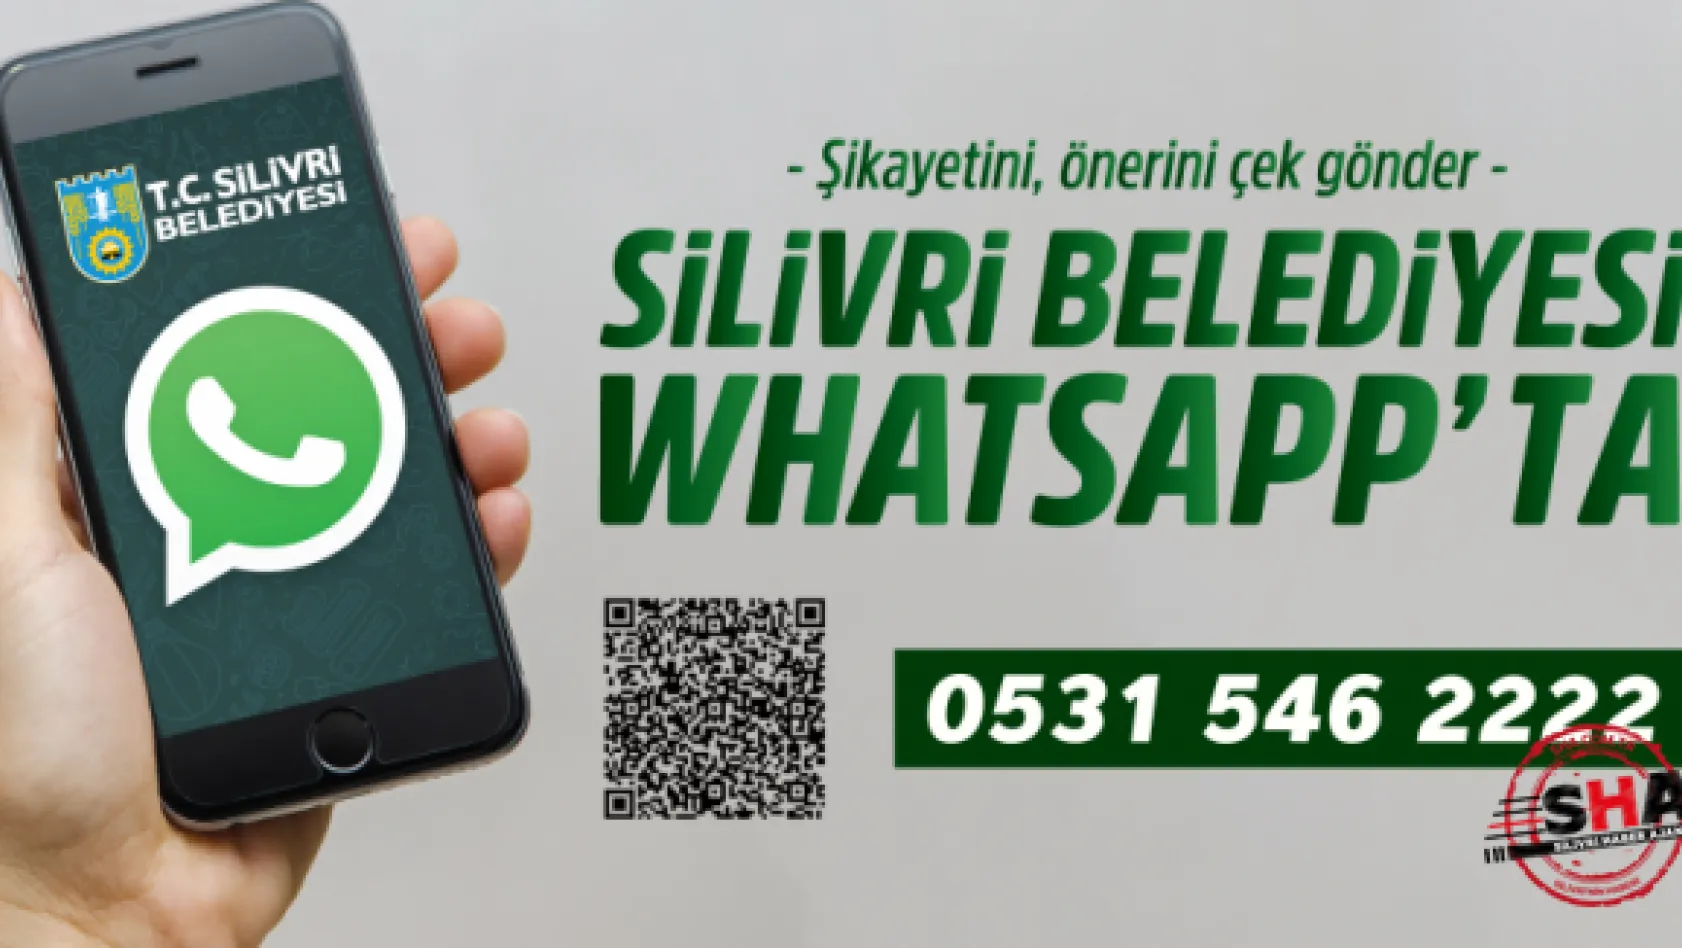 Silivri Belediyesi Whatsapp'ta